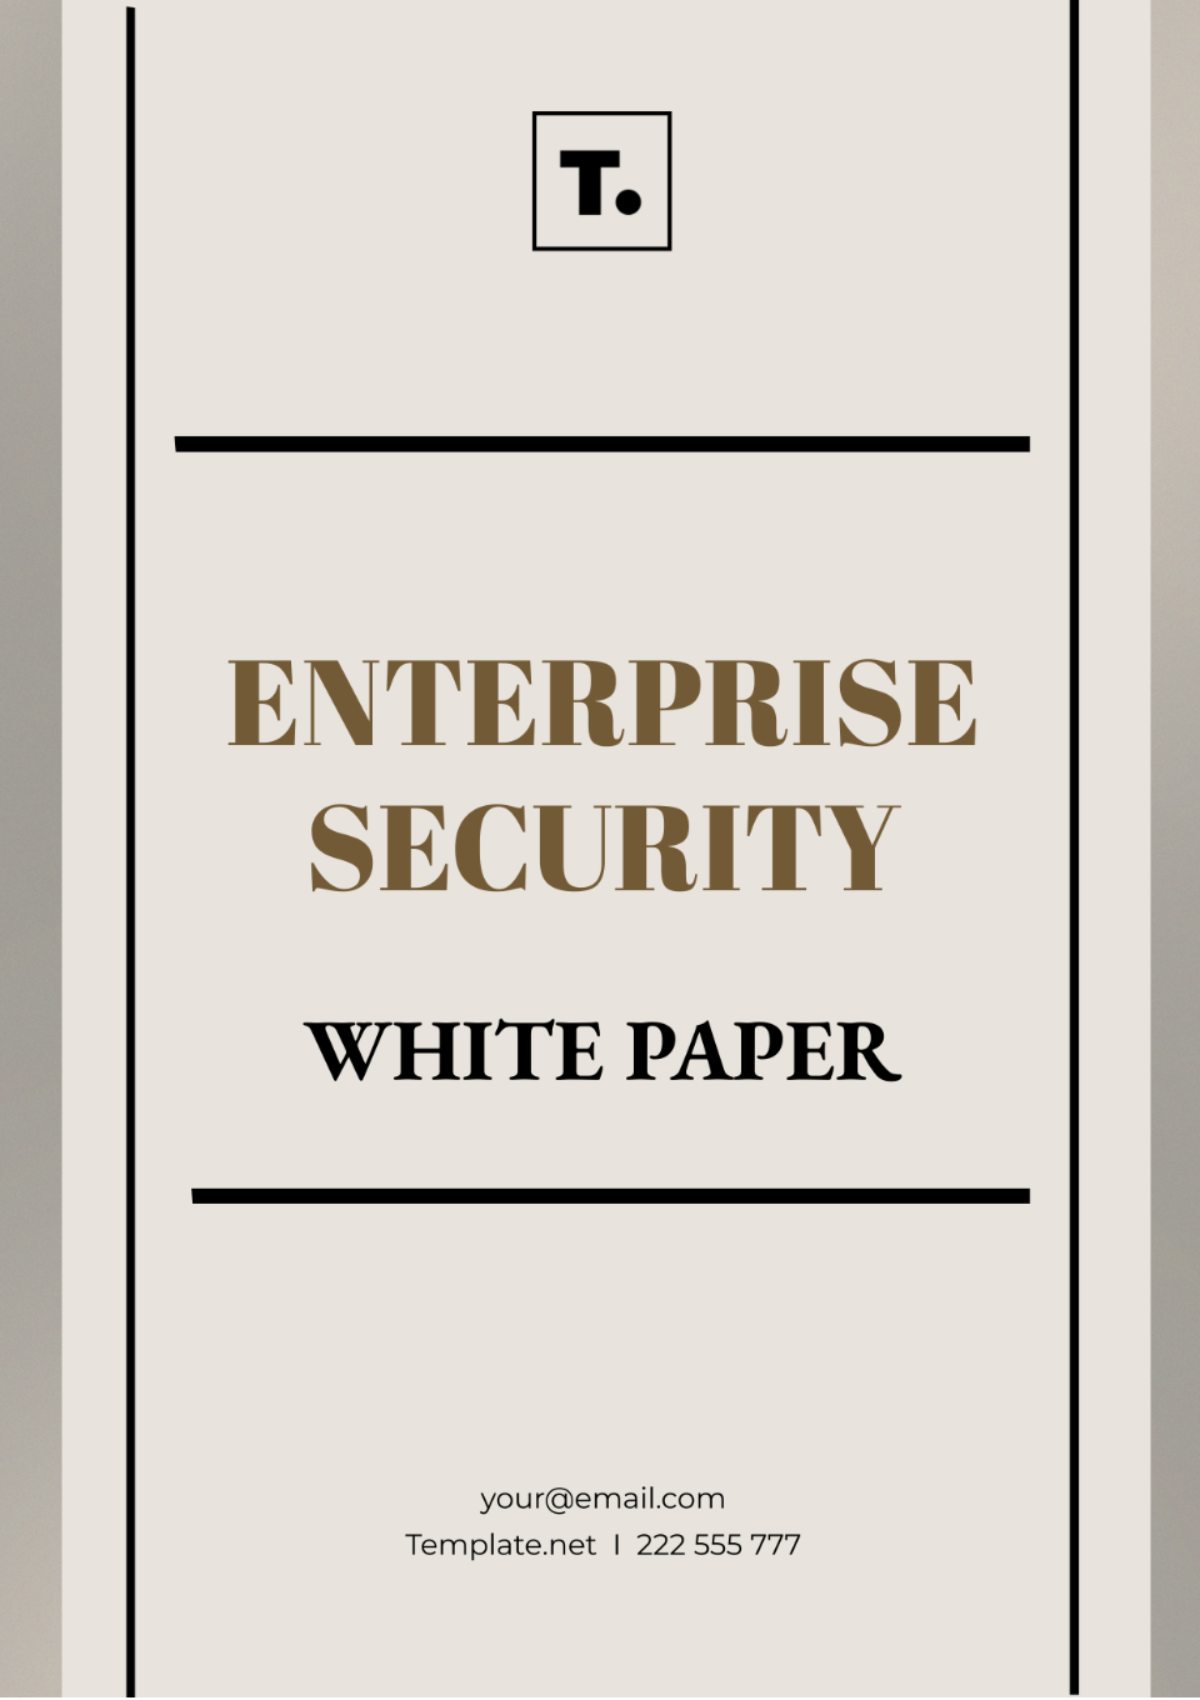 Enterprise Security White Paper Template